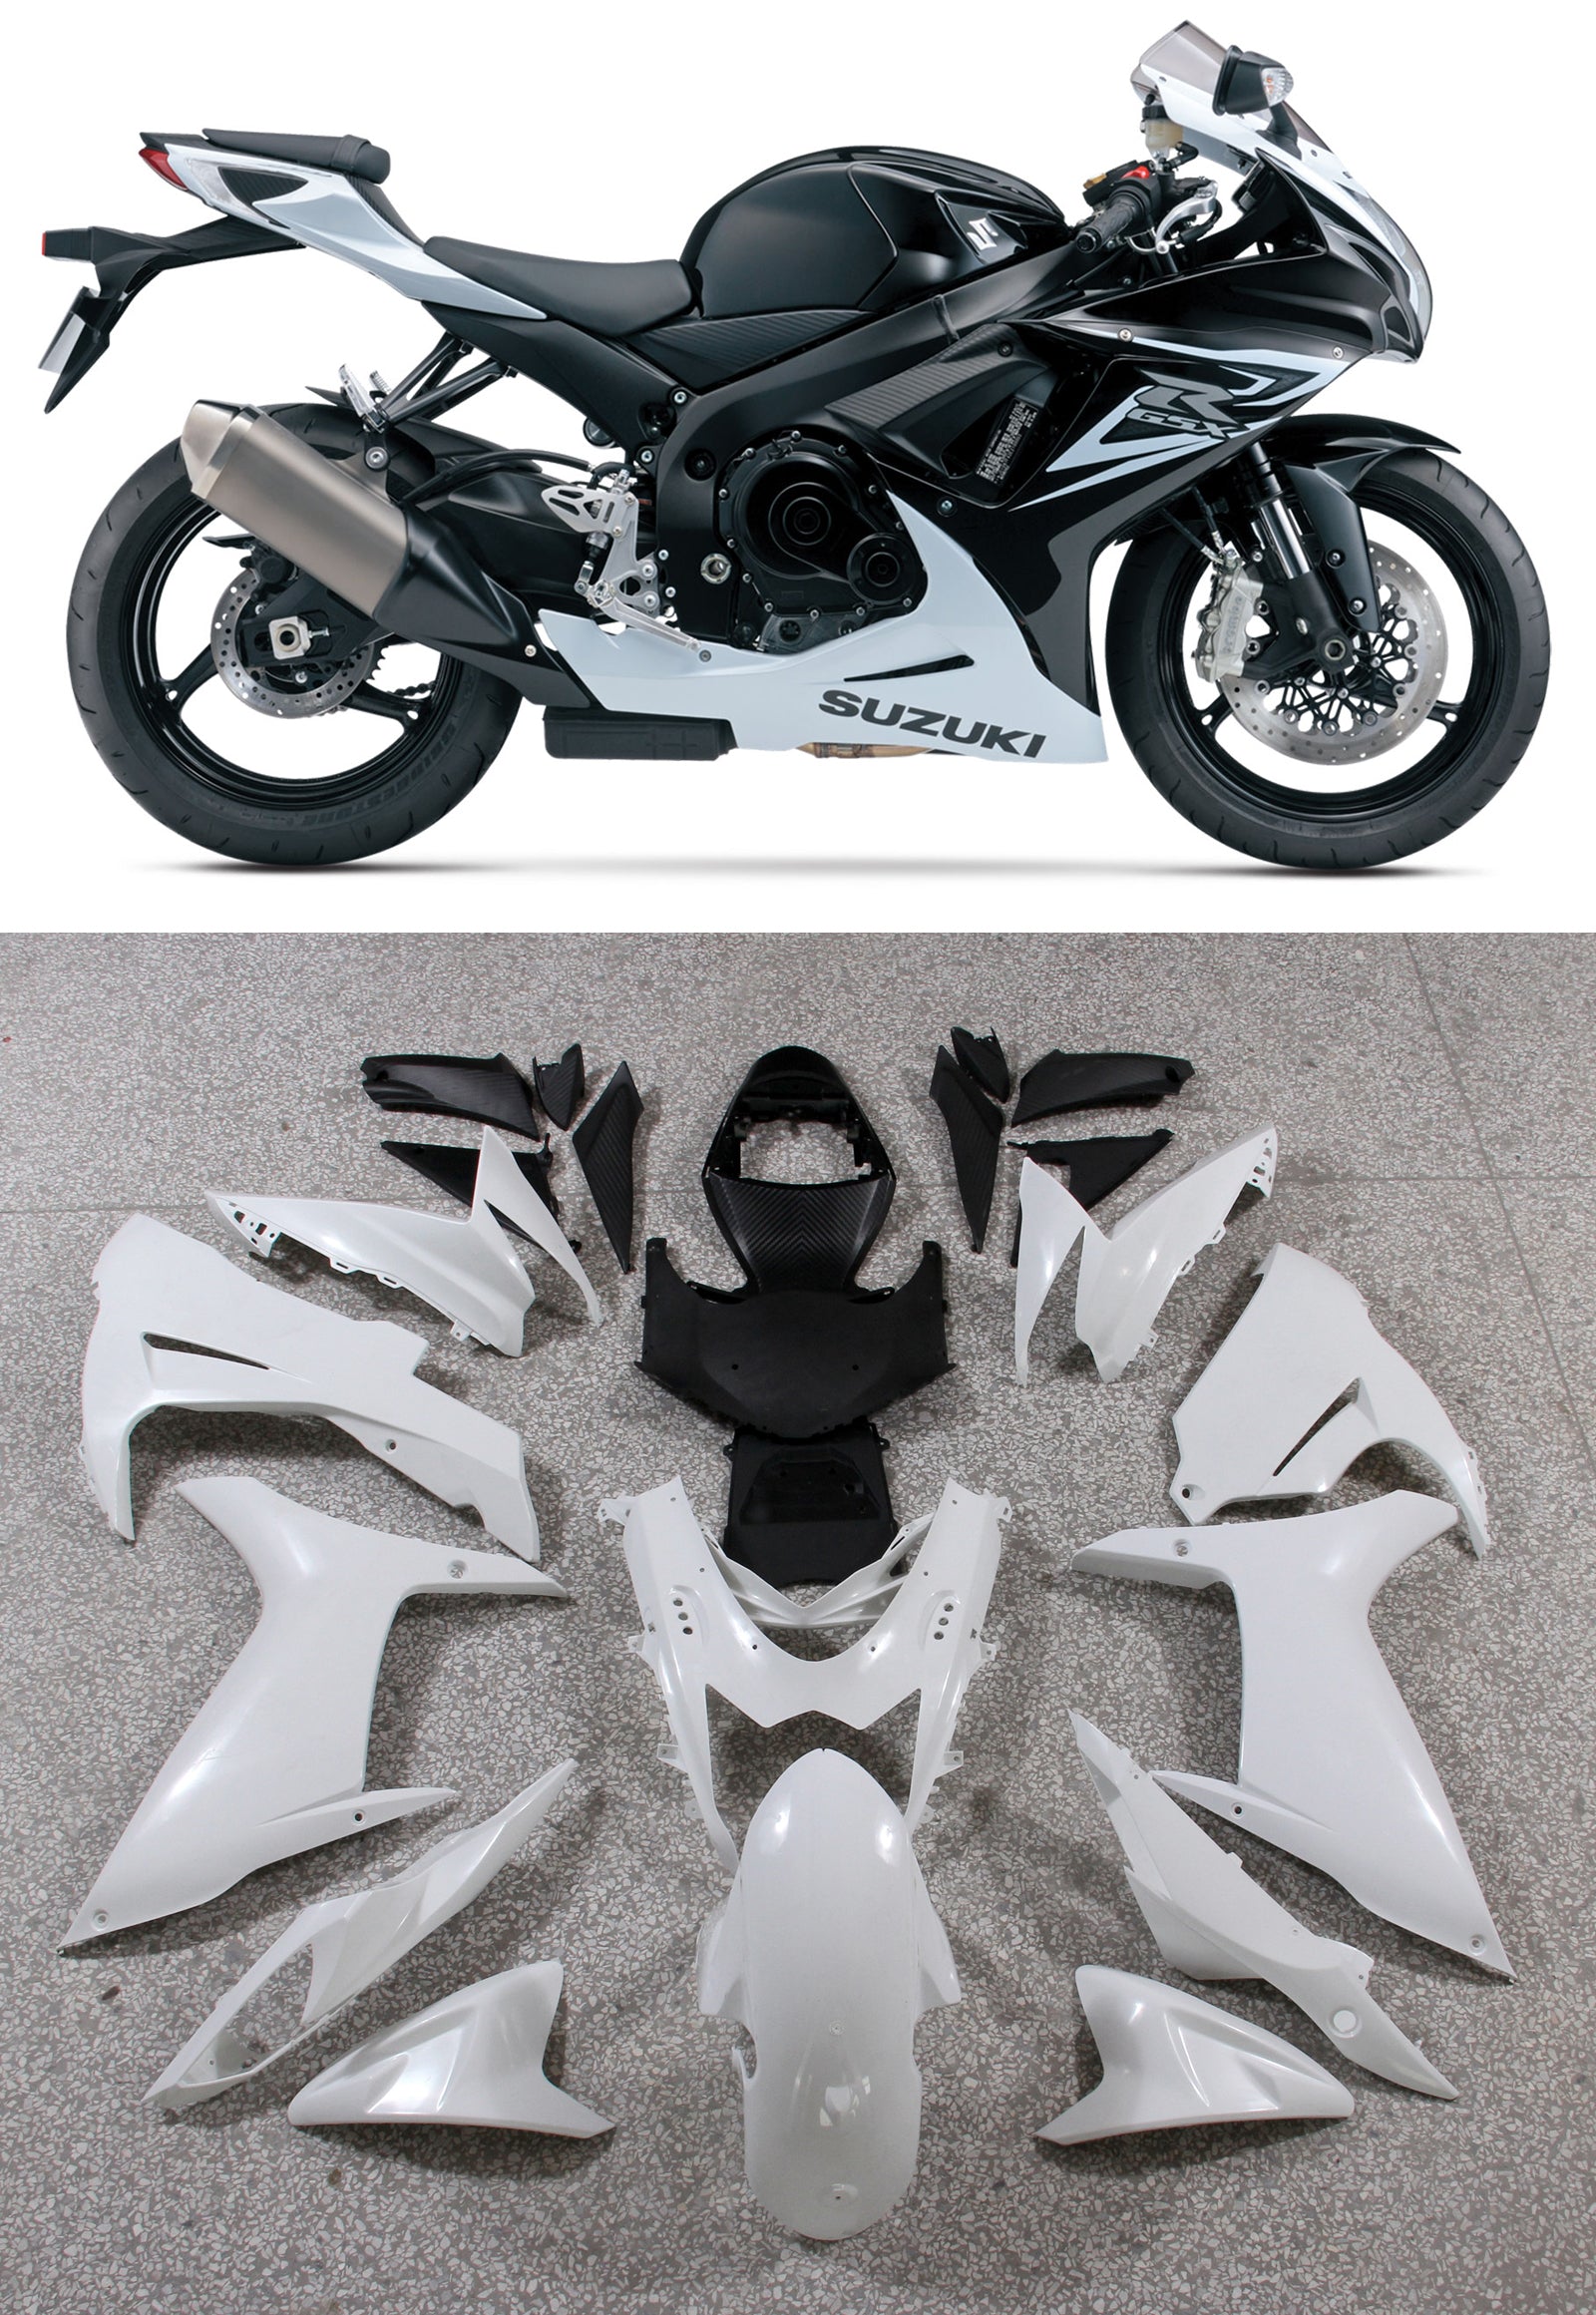 Generic Fit For Suzuki GSXR 600/750 (2011-2014) K11 Bodywork Fairing ABS Injection Molded Set 17 Style